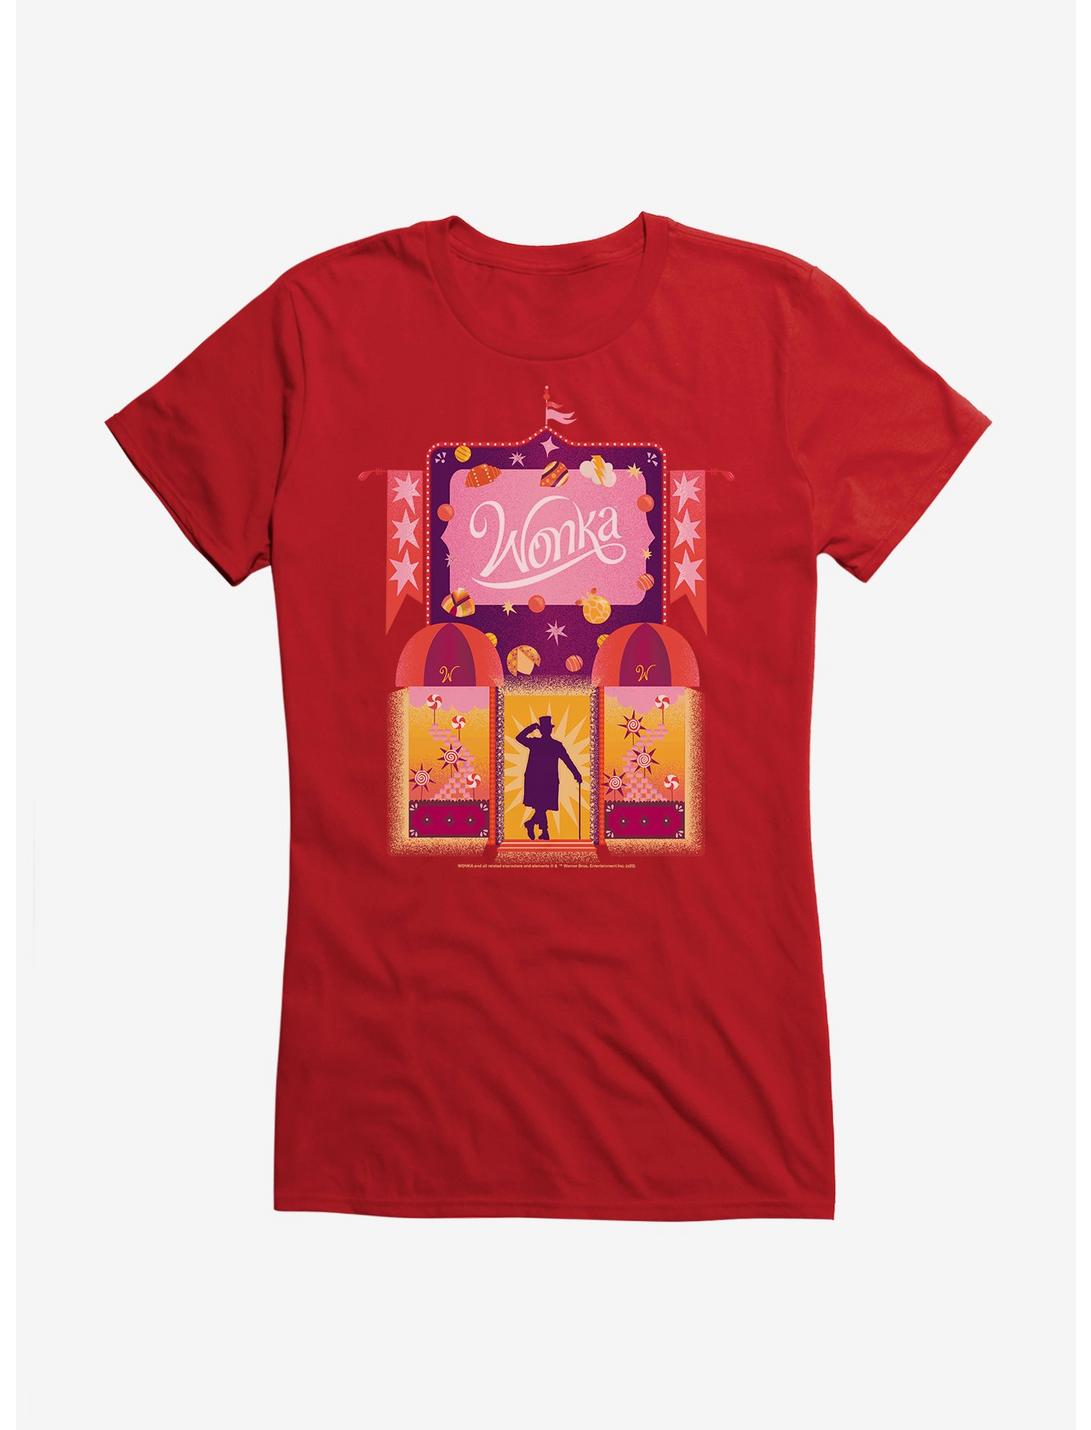 Wonka Chocolate Shop Girls T-Shirt, , hi-res